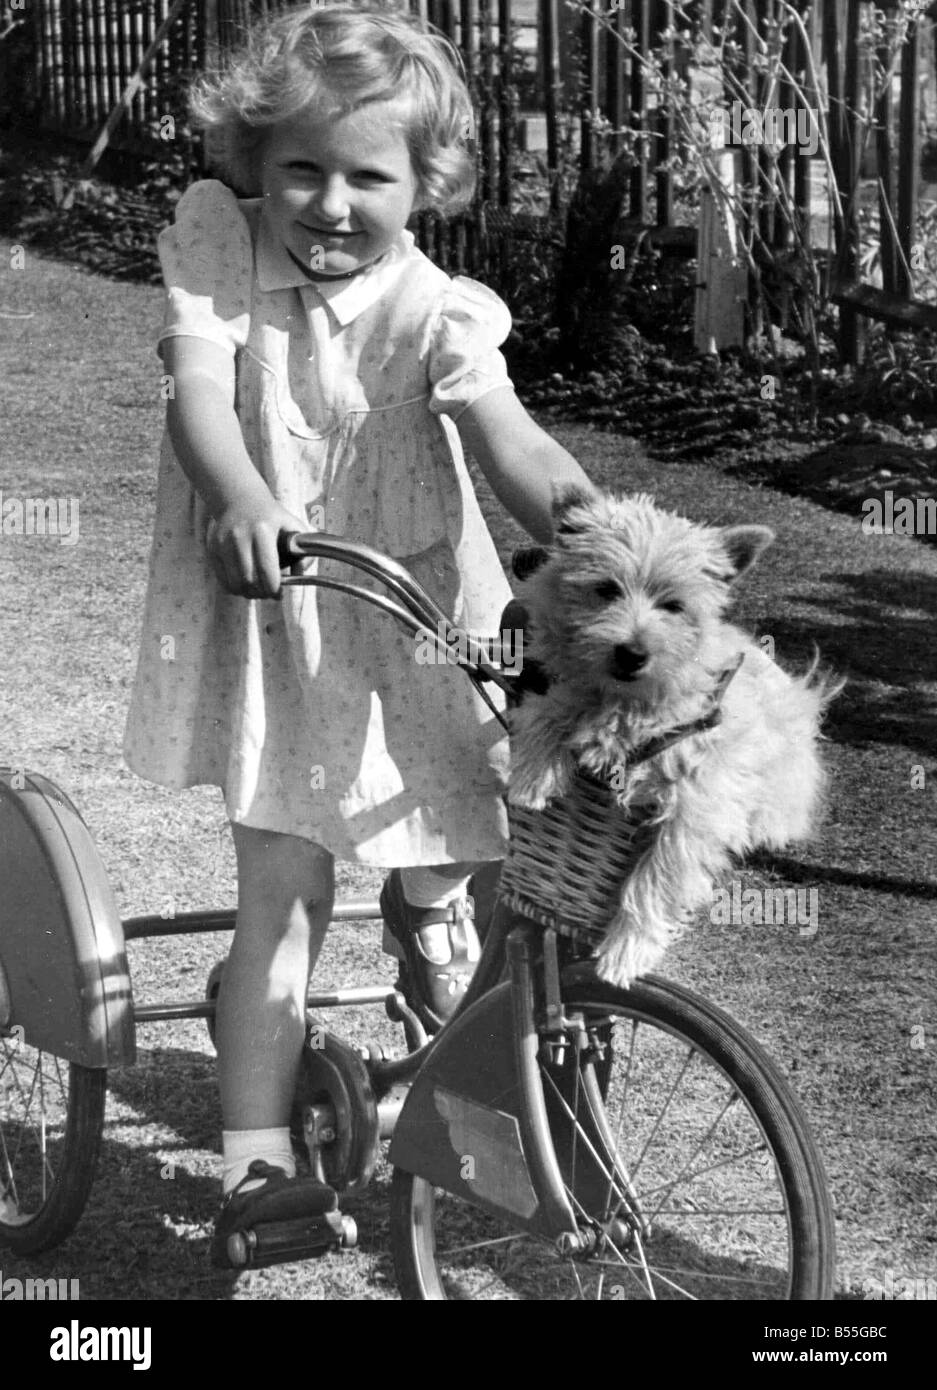 little girl bike basket